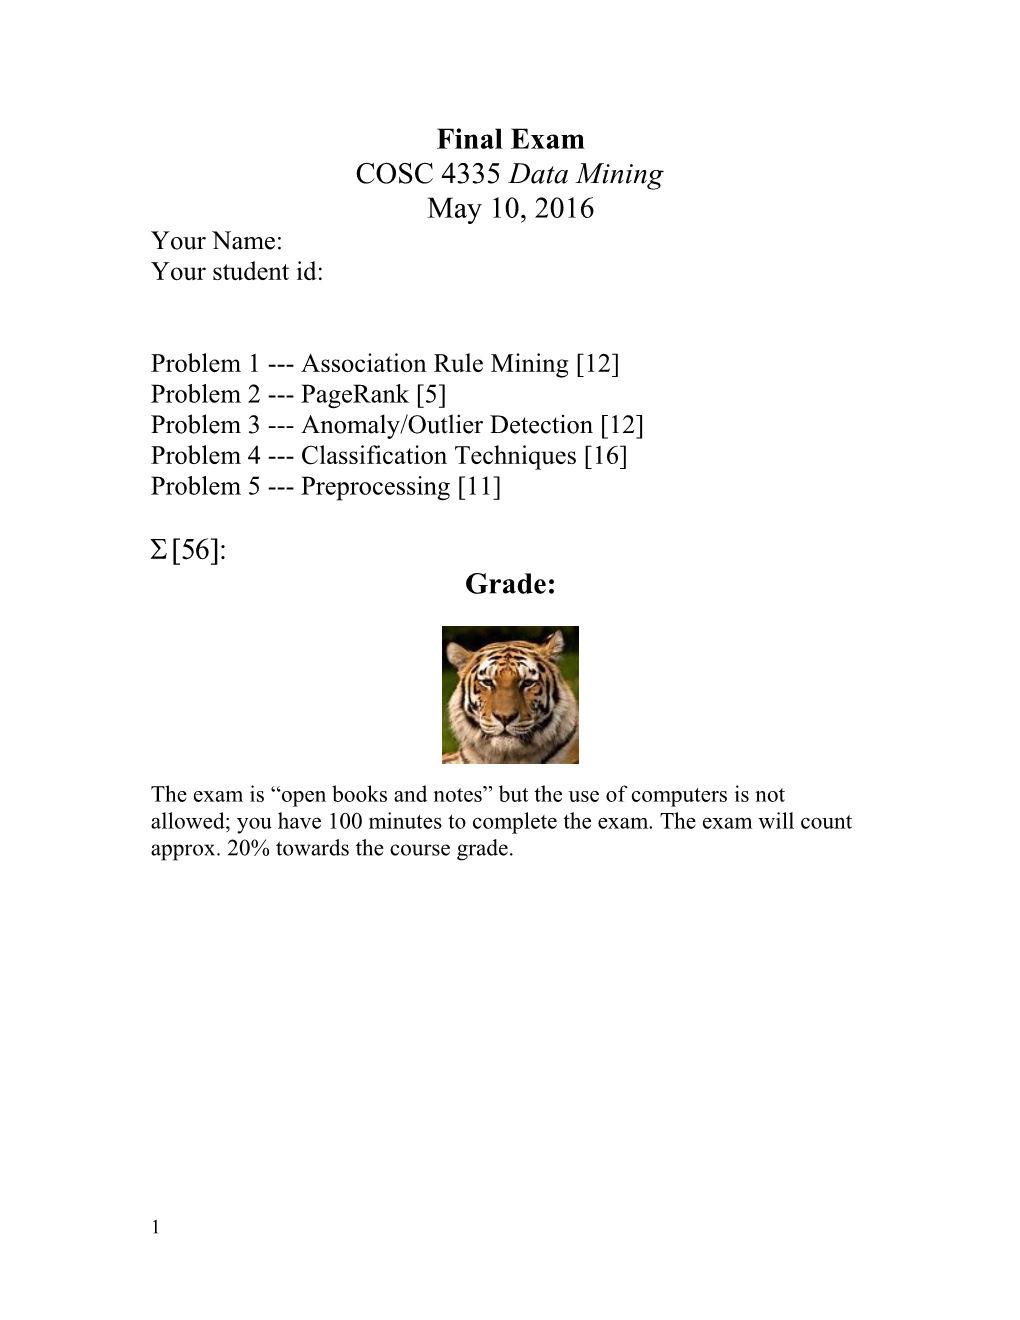 COSC 4335 Data Mining